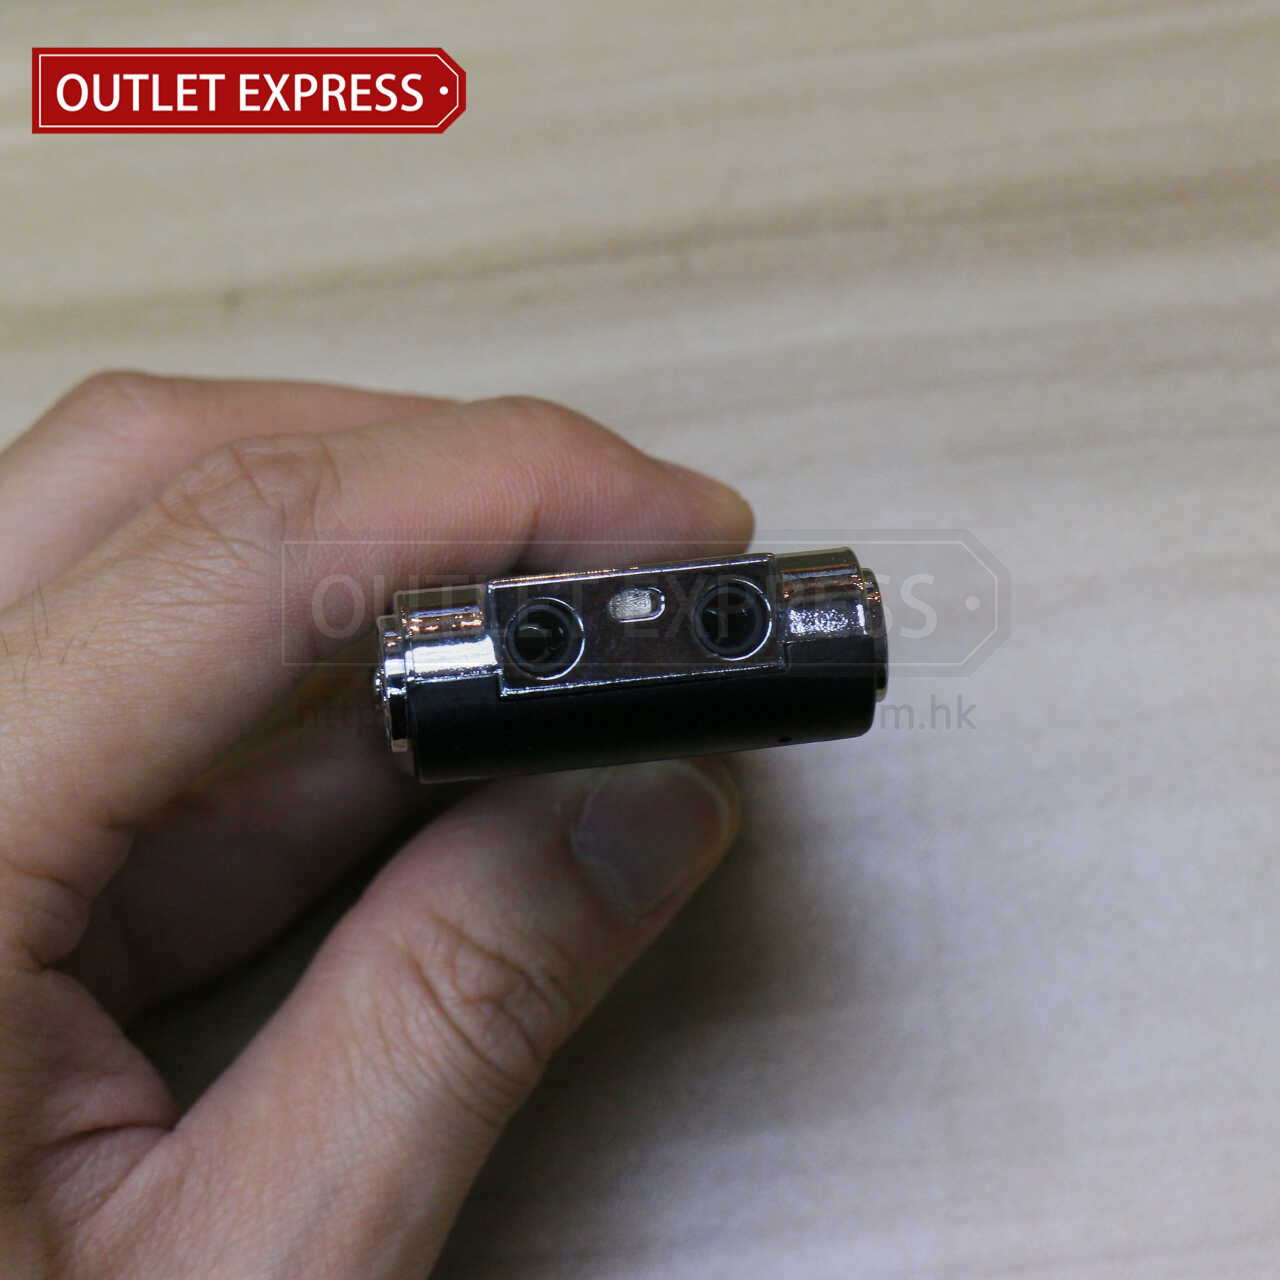 8GB USB高清數碼錄音筆 | MP3播放器 插口- Outlet Express HK生活百貨城實拍相片